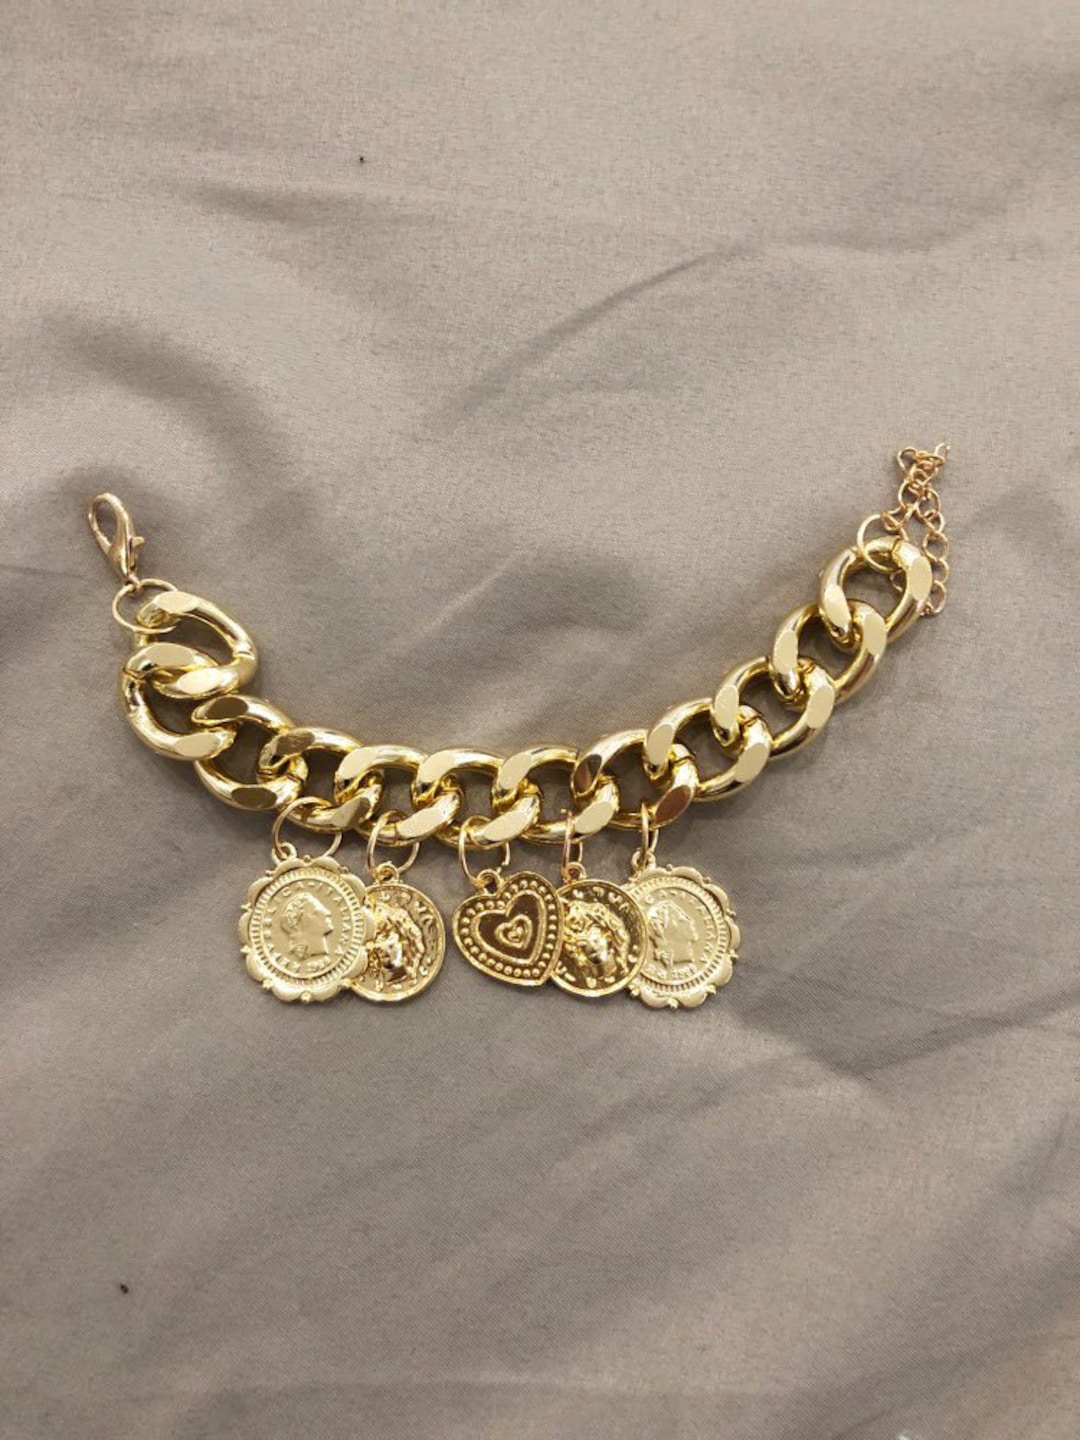 Gold Chain Bracelet, Chain Link Bracelet With Coin, Bike Chain Bracelet ...